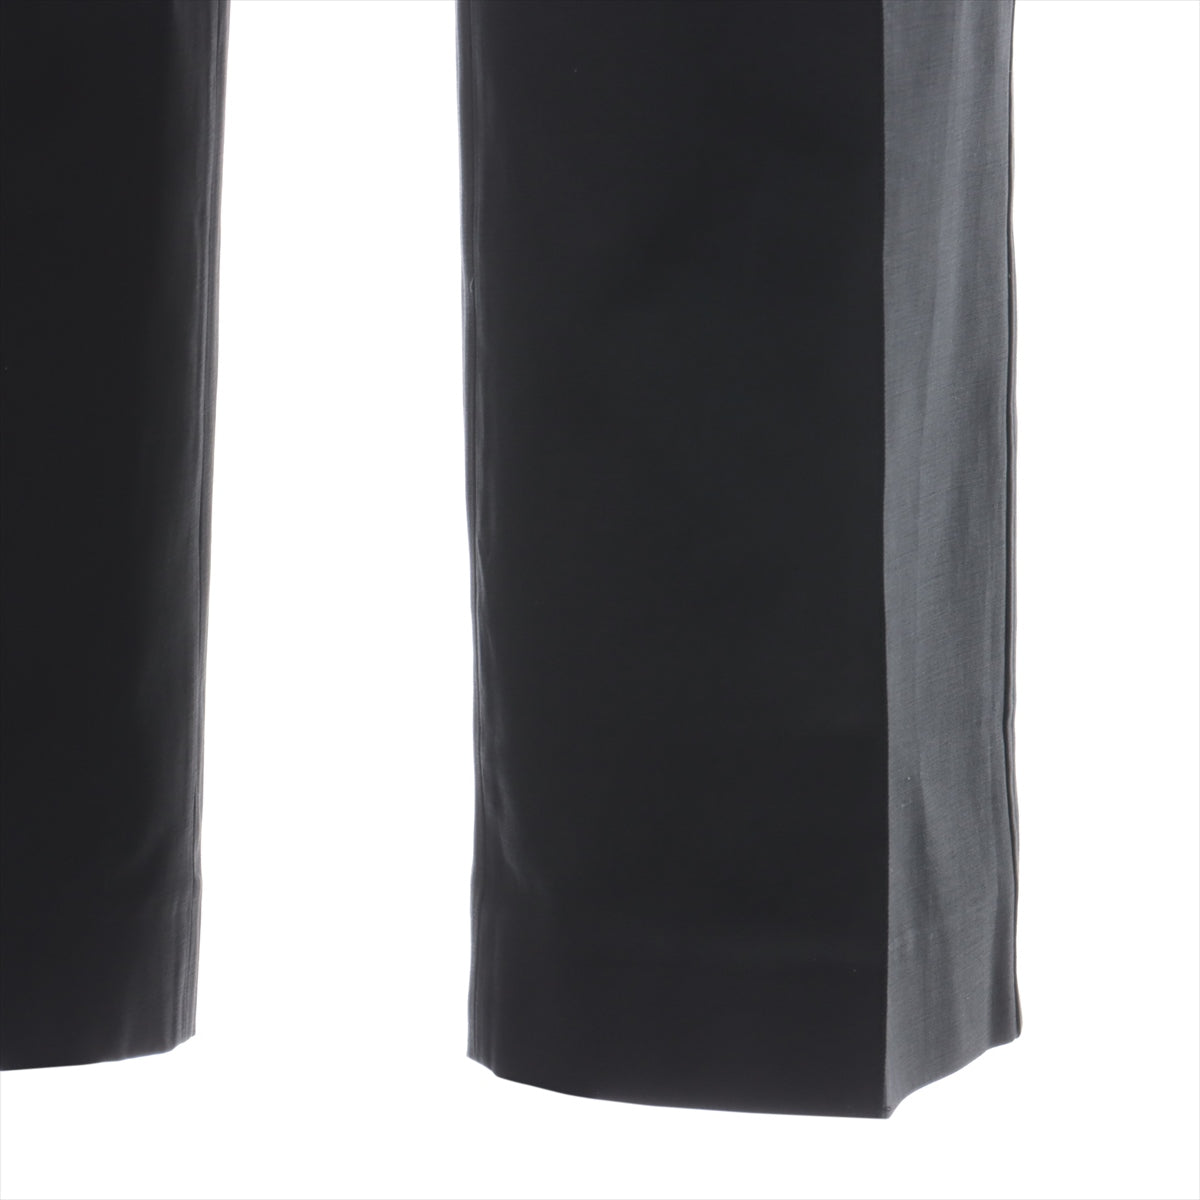 Hermès Cotton & polyurethane Pants 34 Ladies' Black  16-7403 Wide pants